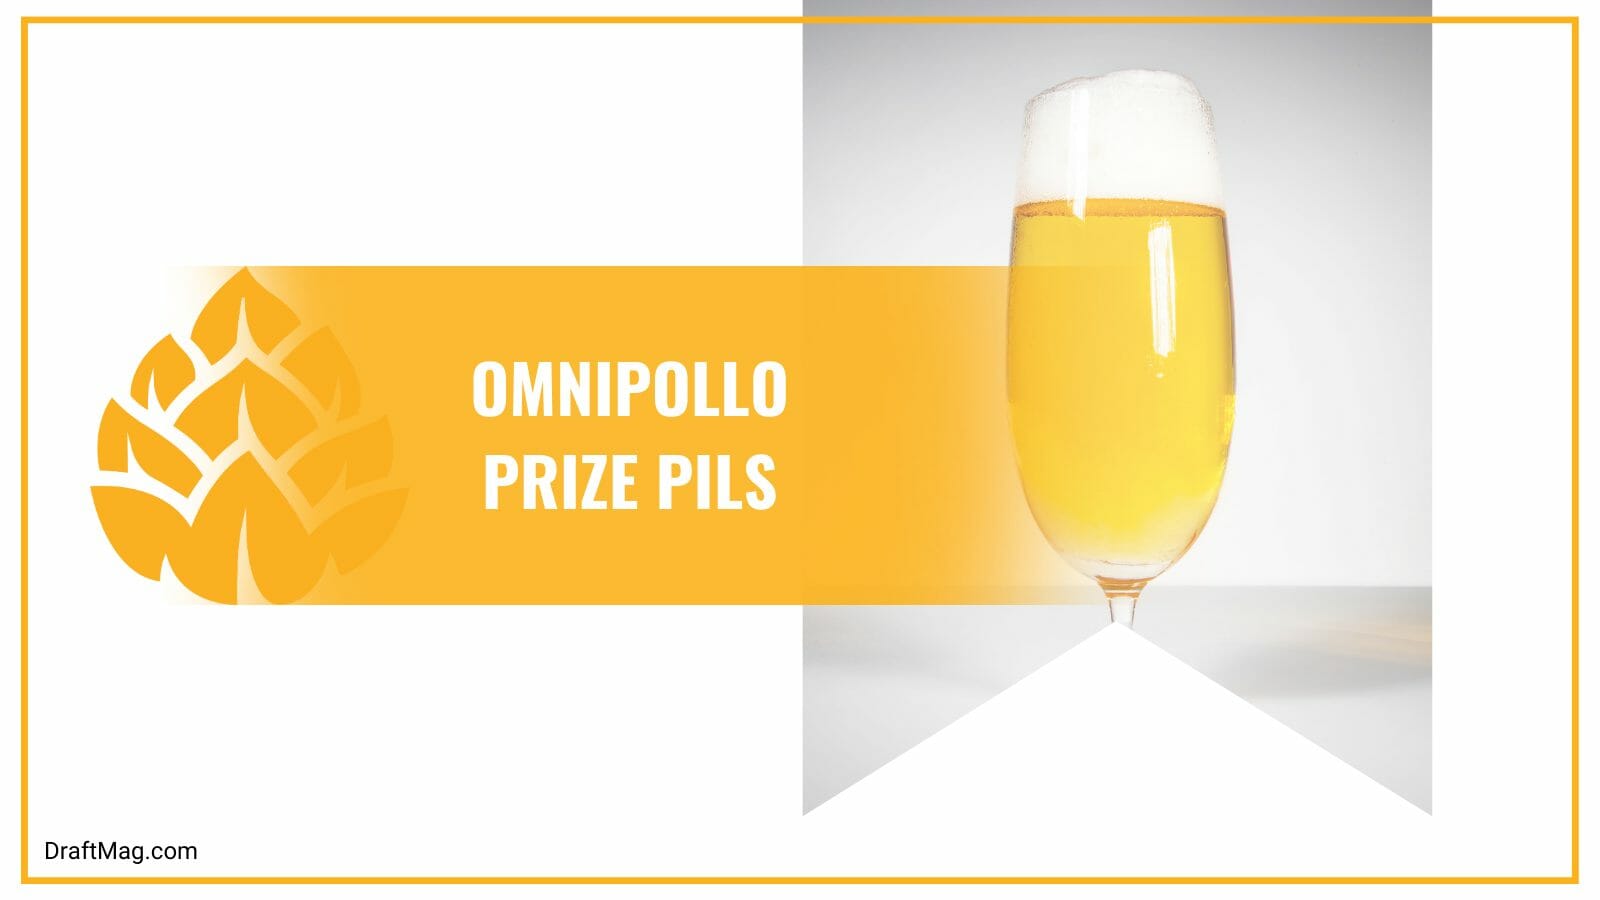 Omnipollo prize pils